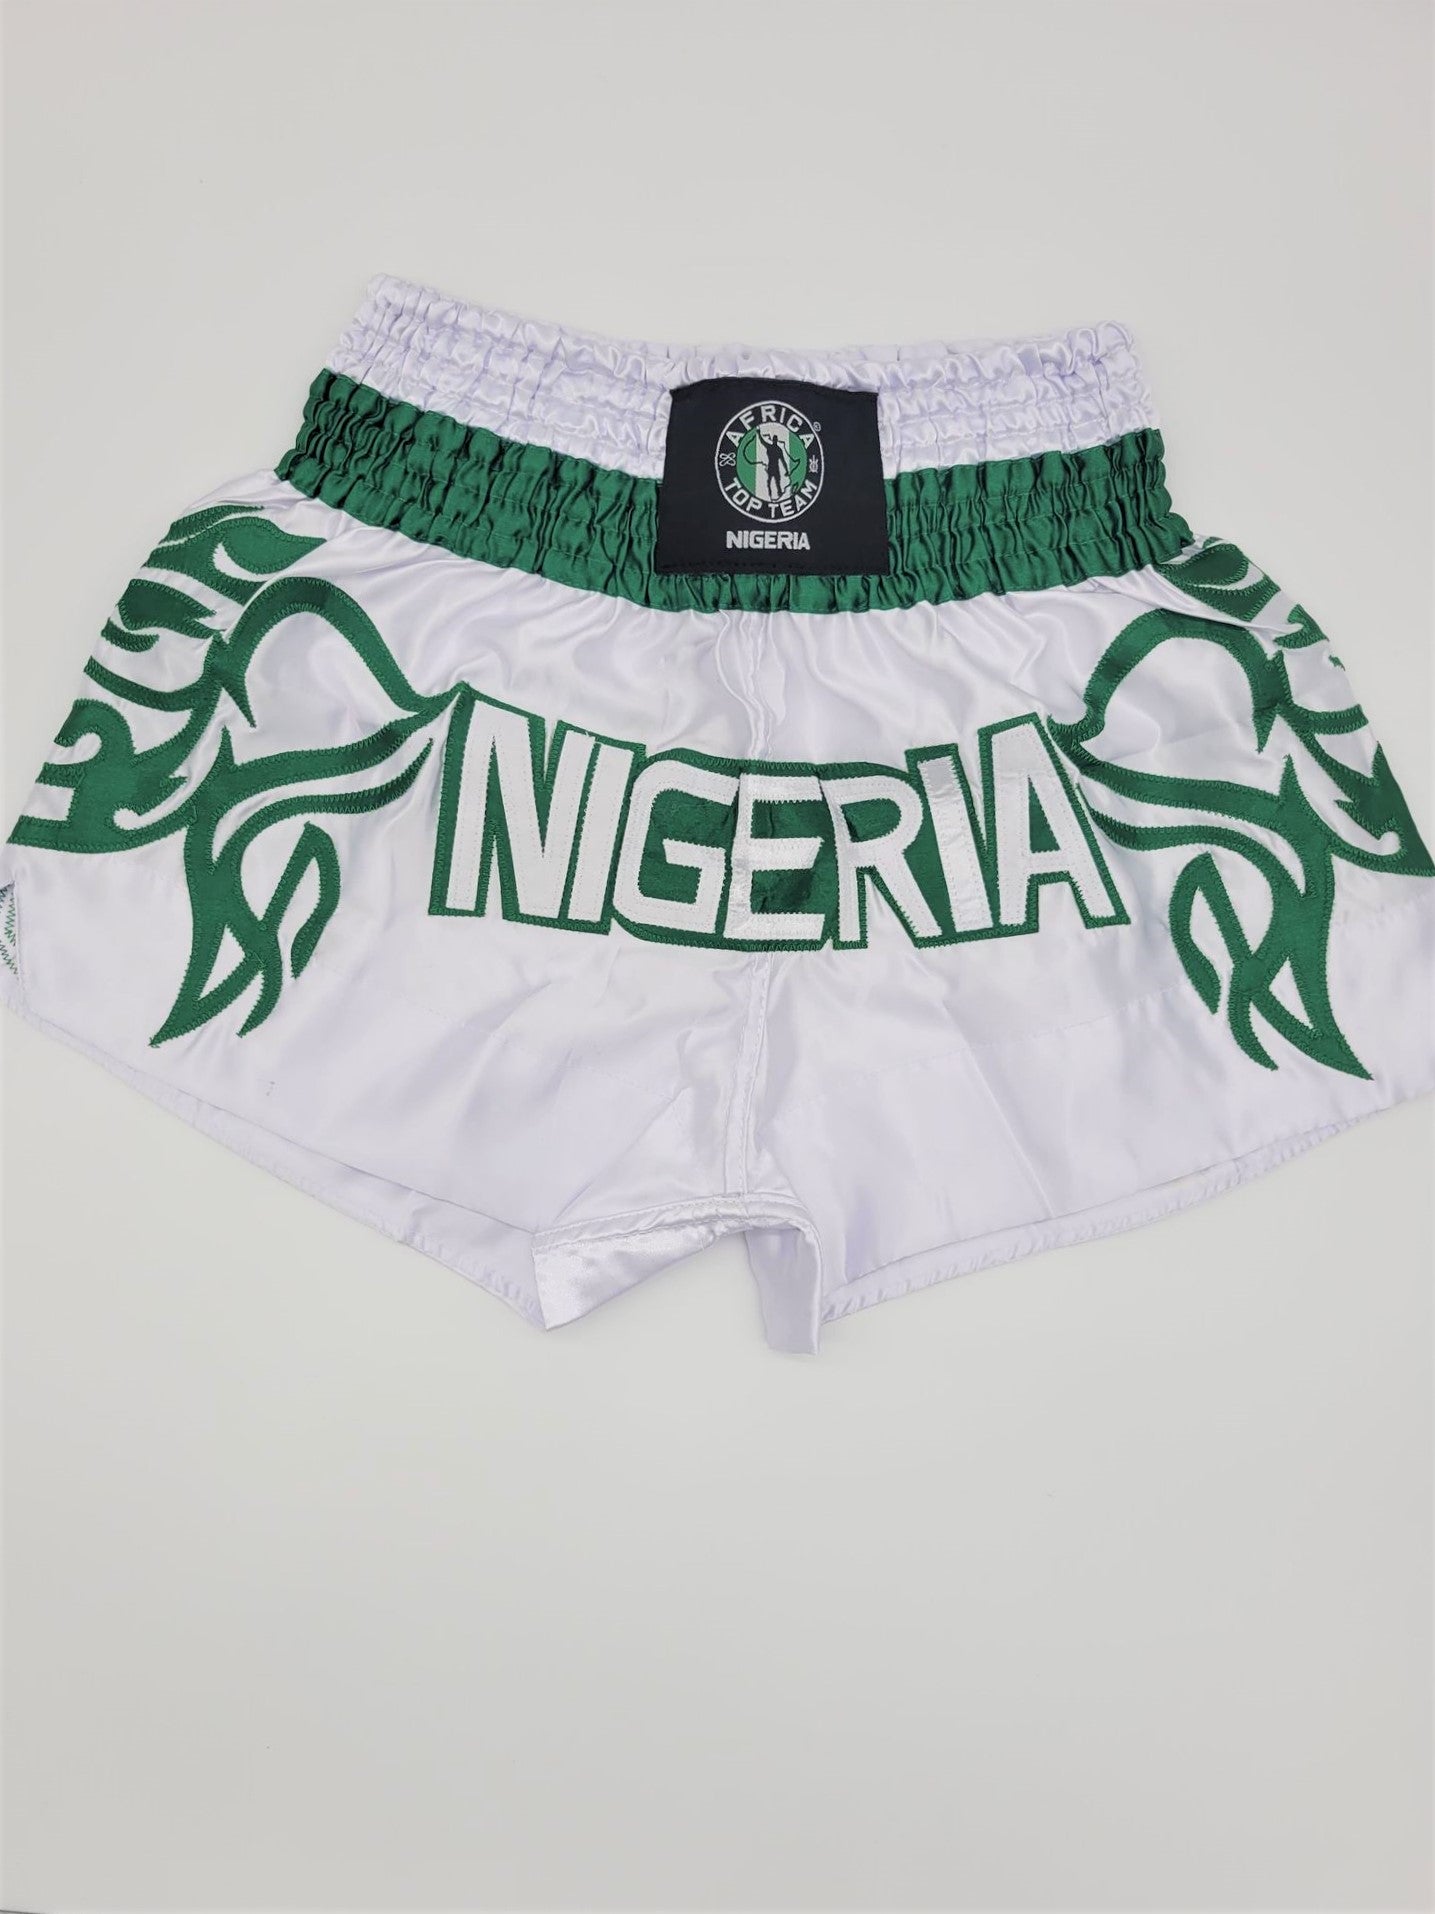 Africa Top Team Nigeria White/Green Muay Thai Shorts Boxing, MMA